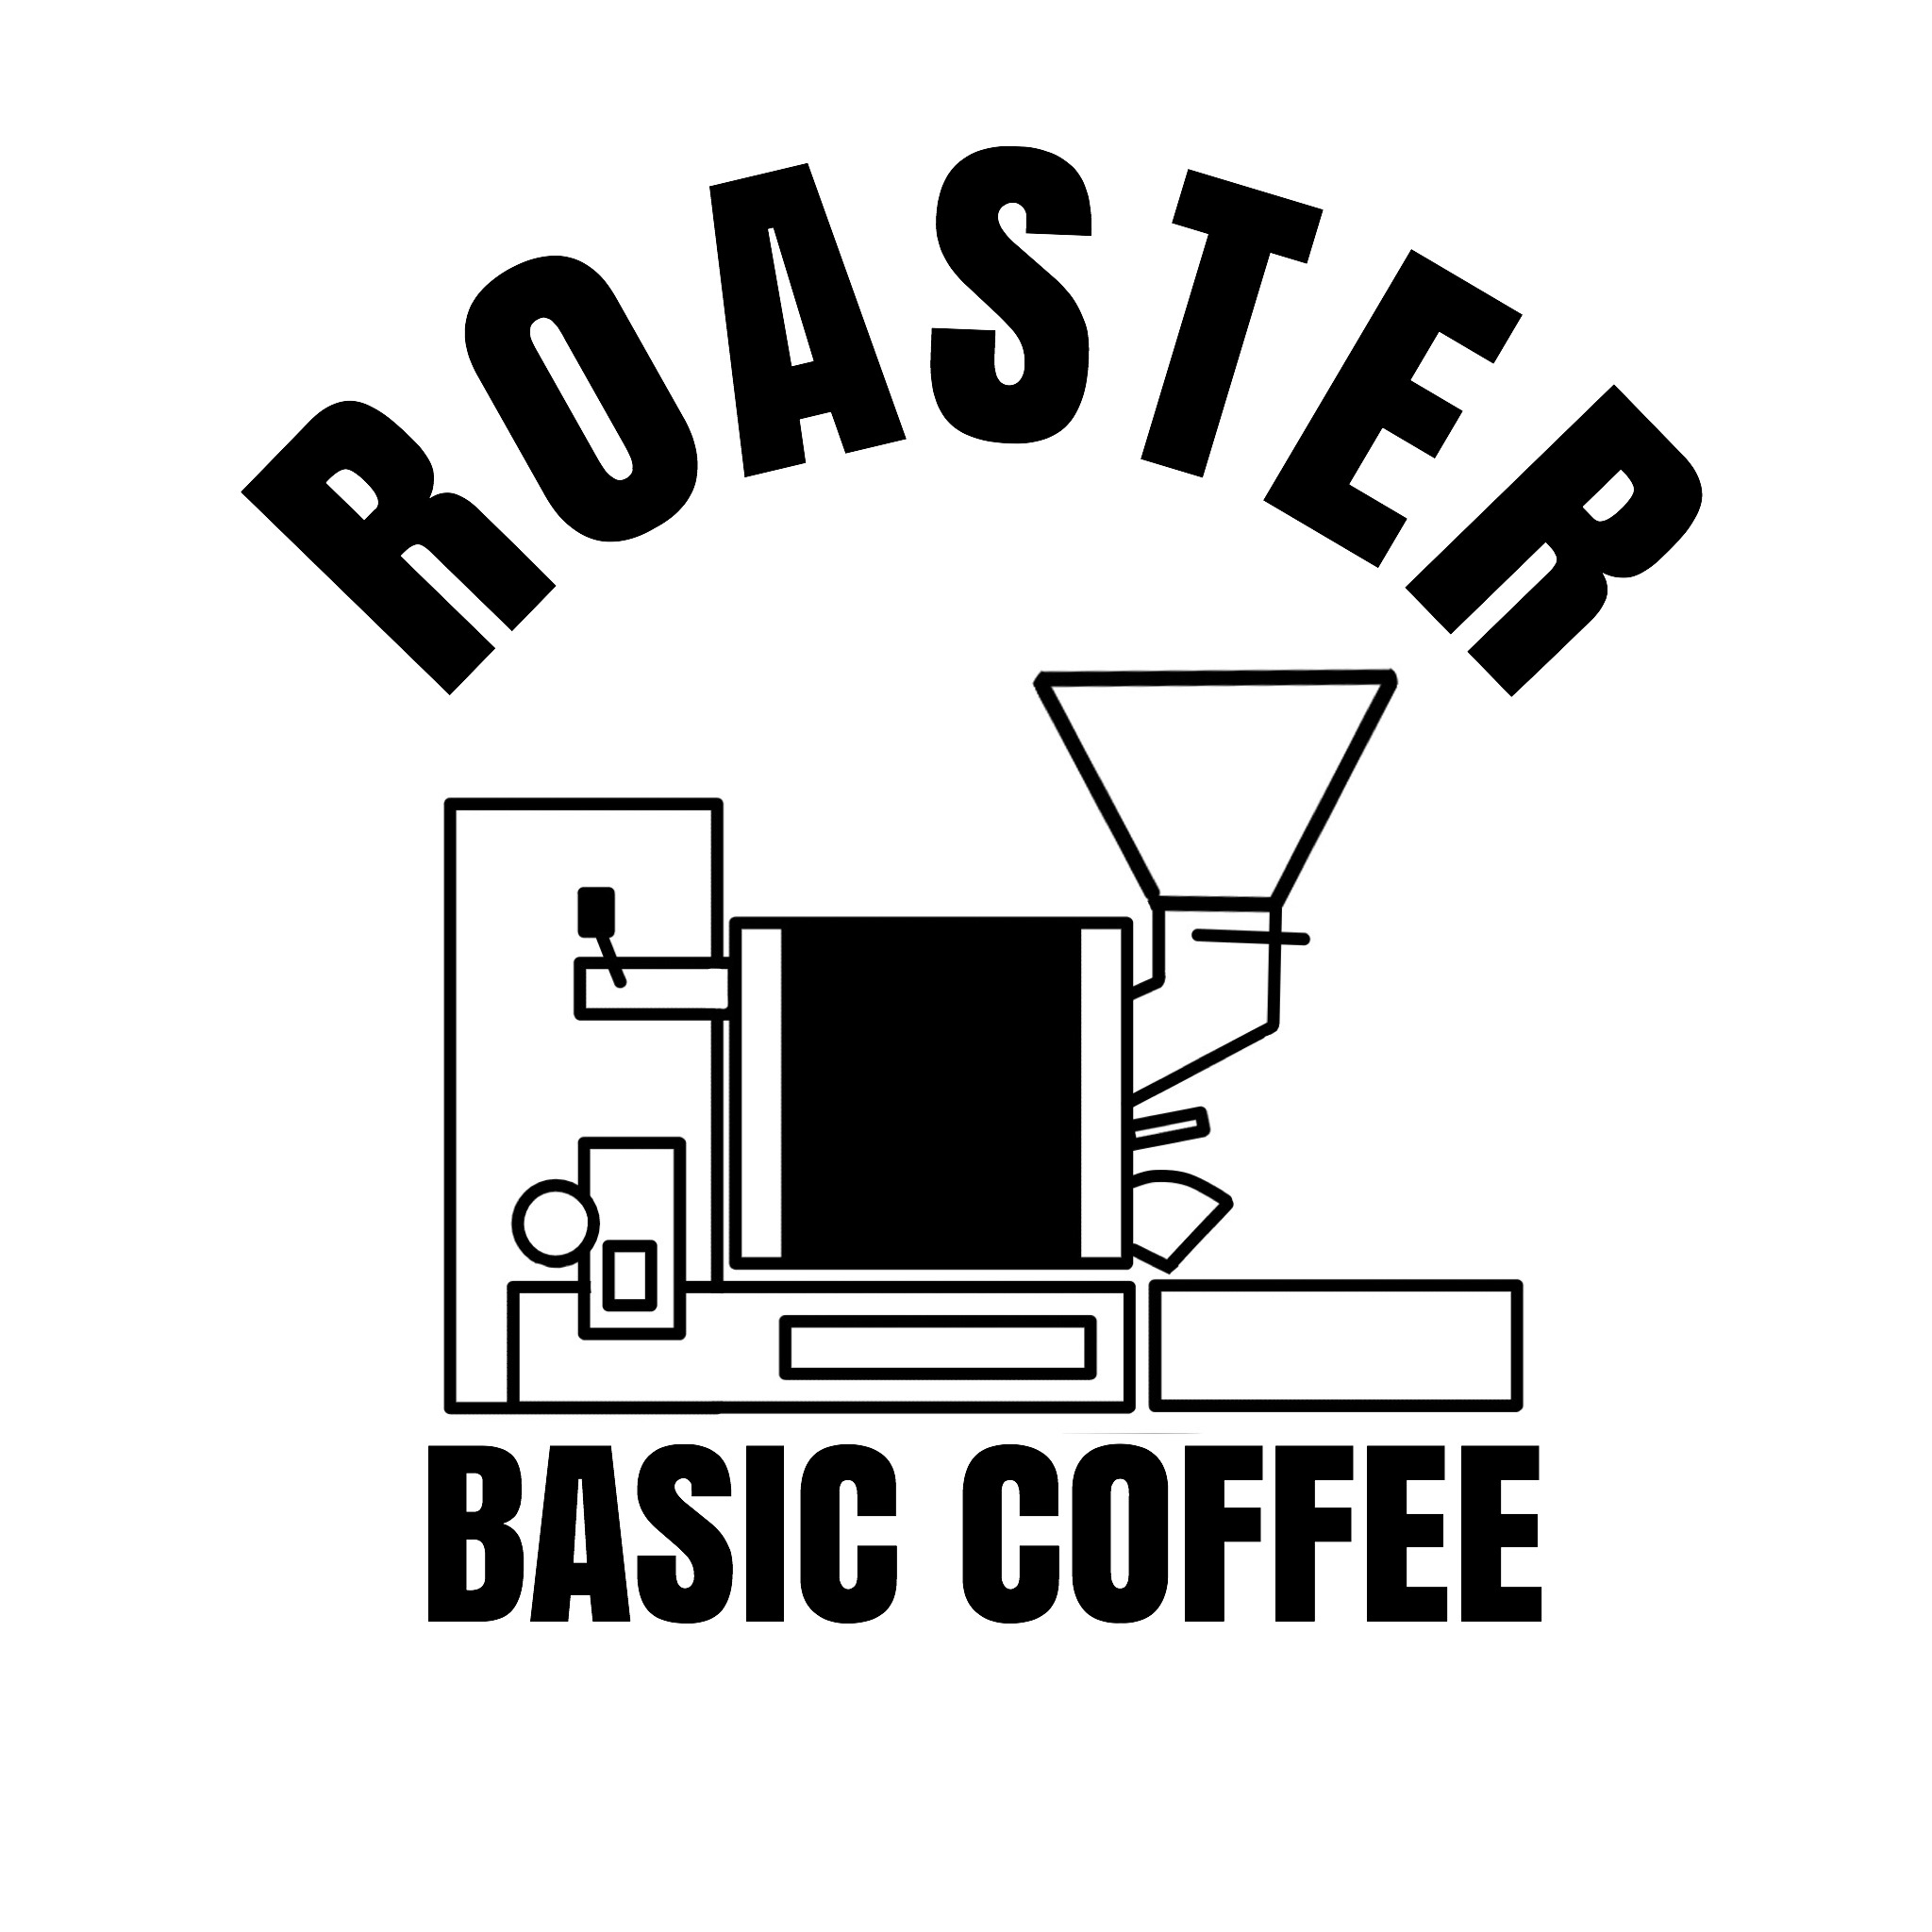 BASIC COFFEE ROASTER